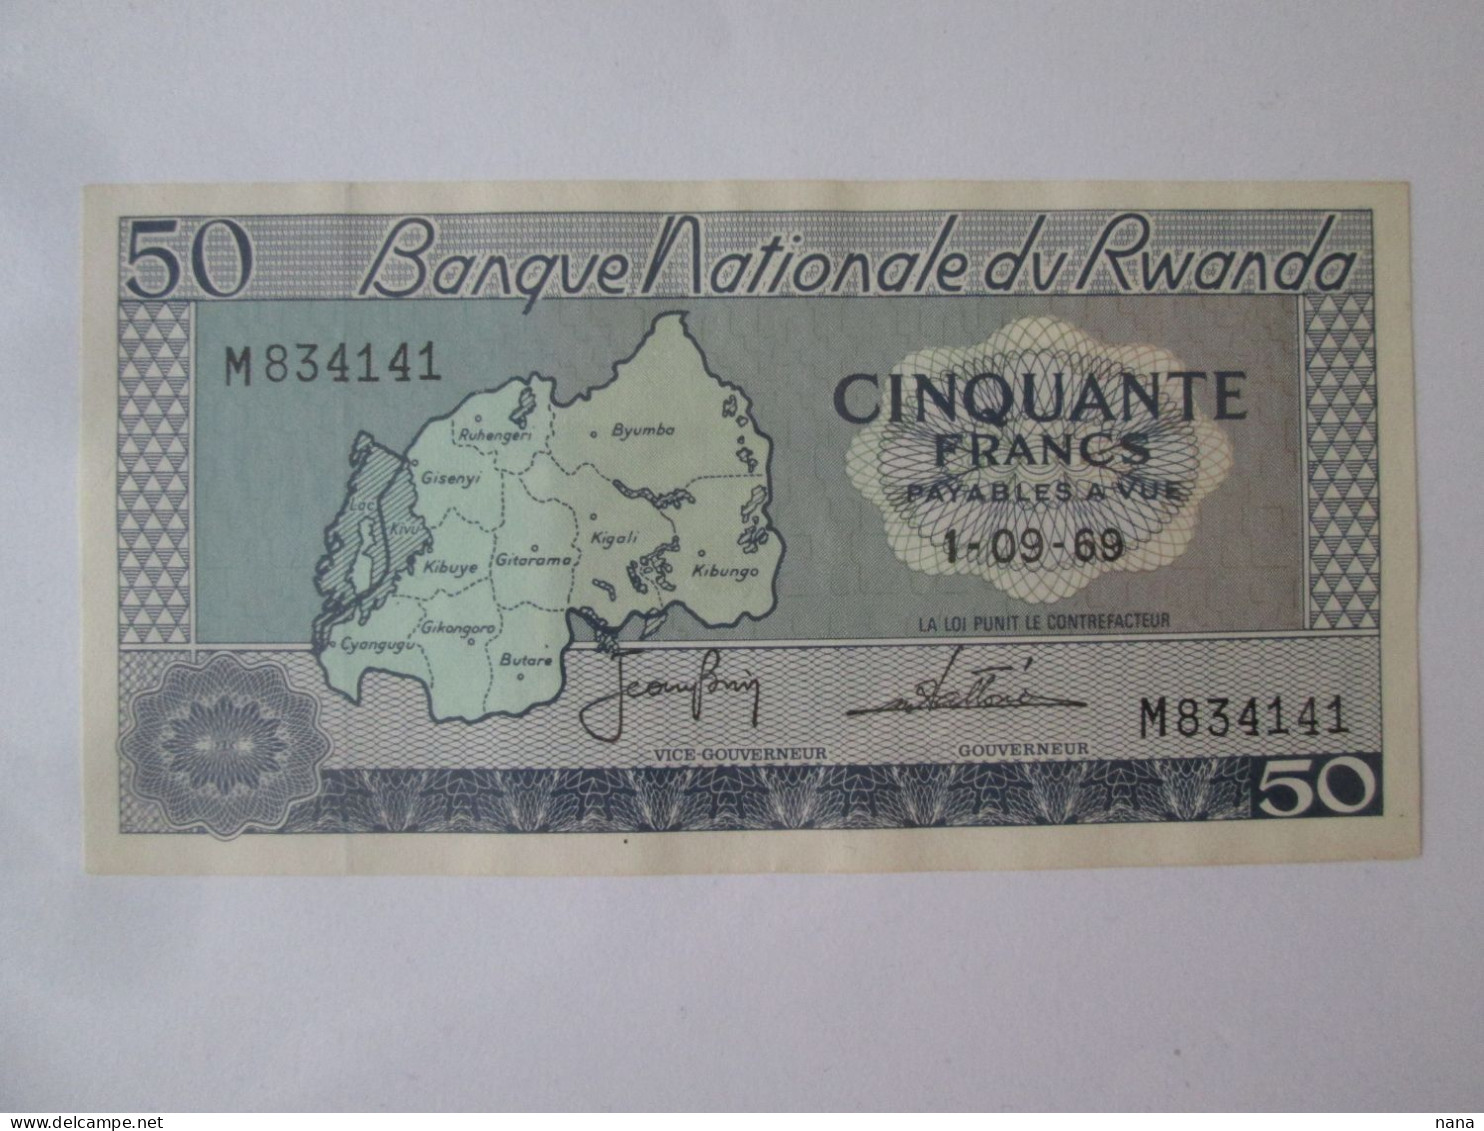 Rare! Rwanda 50 Francs/Amafranga 1969 UNC,see Pictures - Ruanda